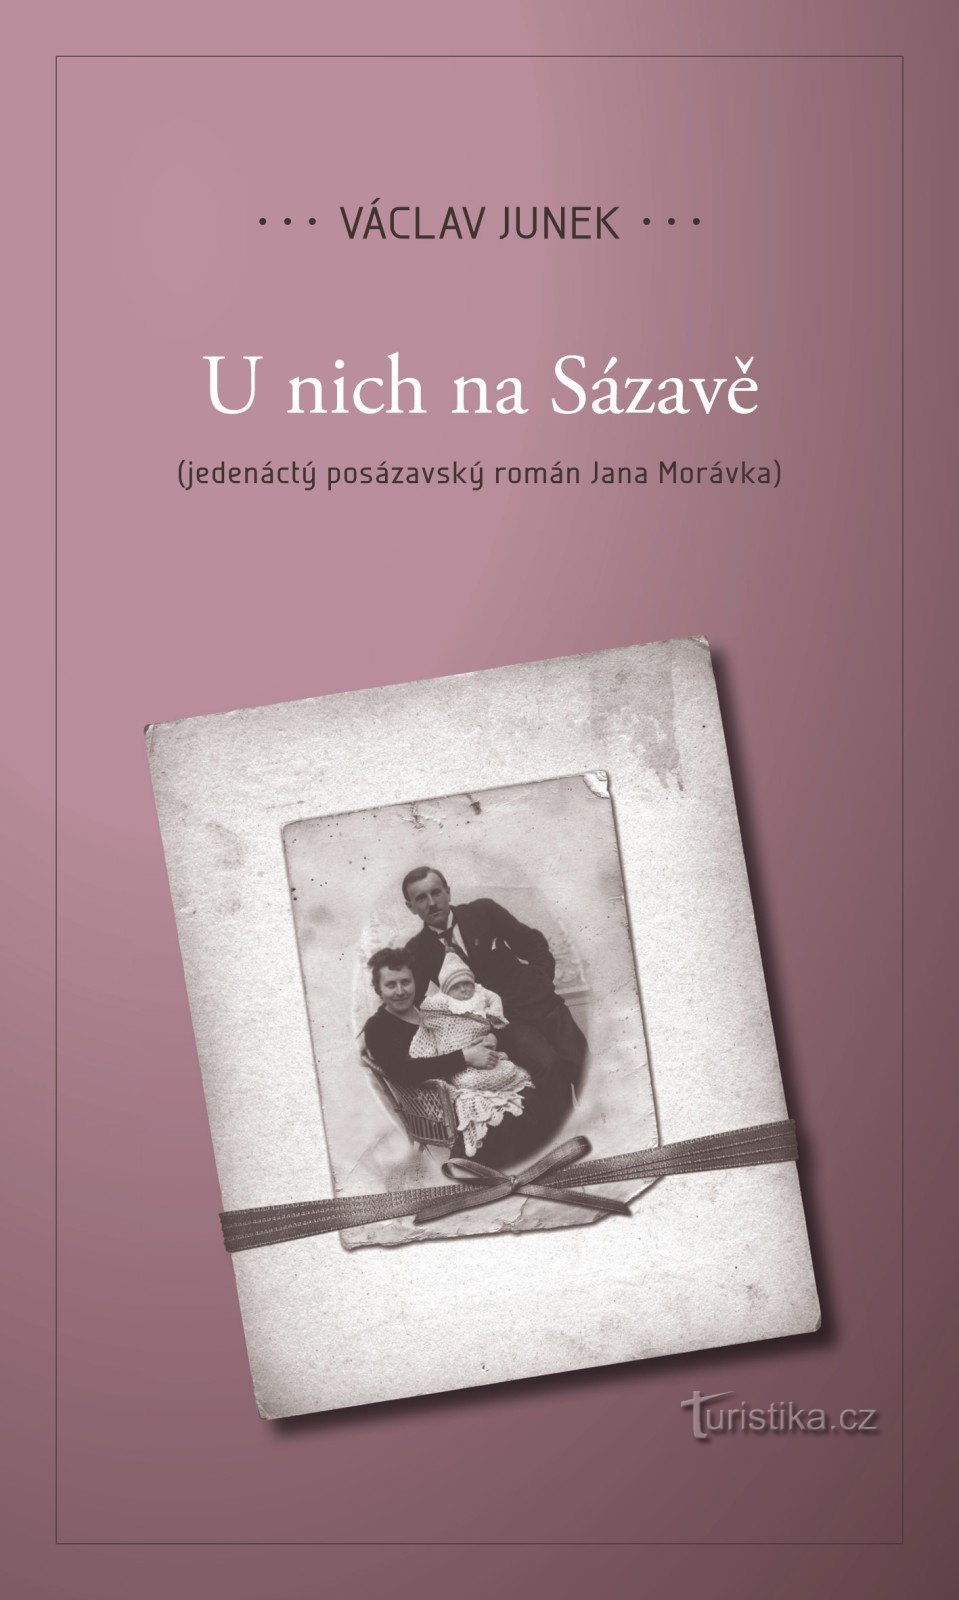 Presentaremos la undécima novela U nich Na Sázavá de Václav Junka